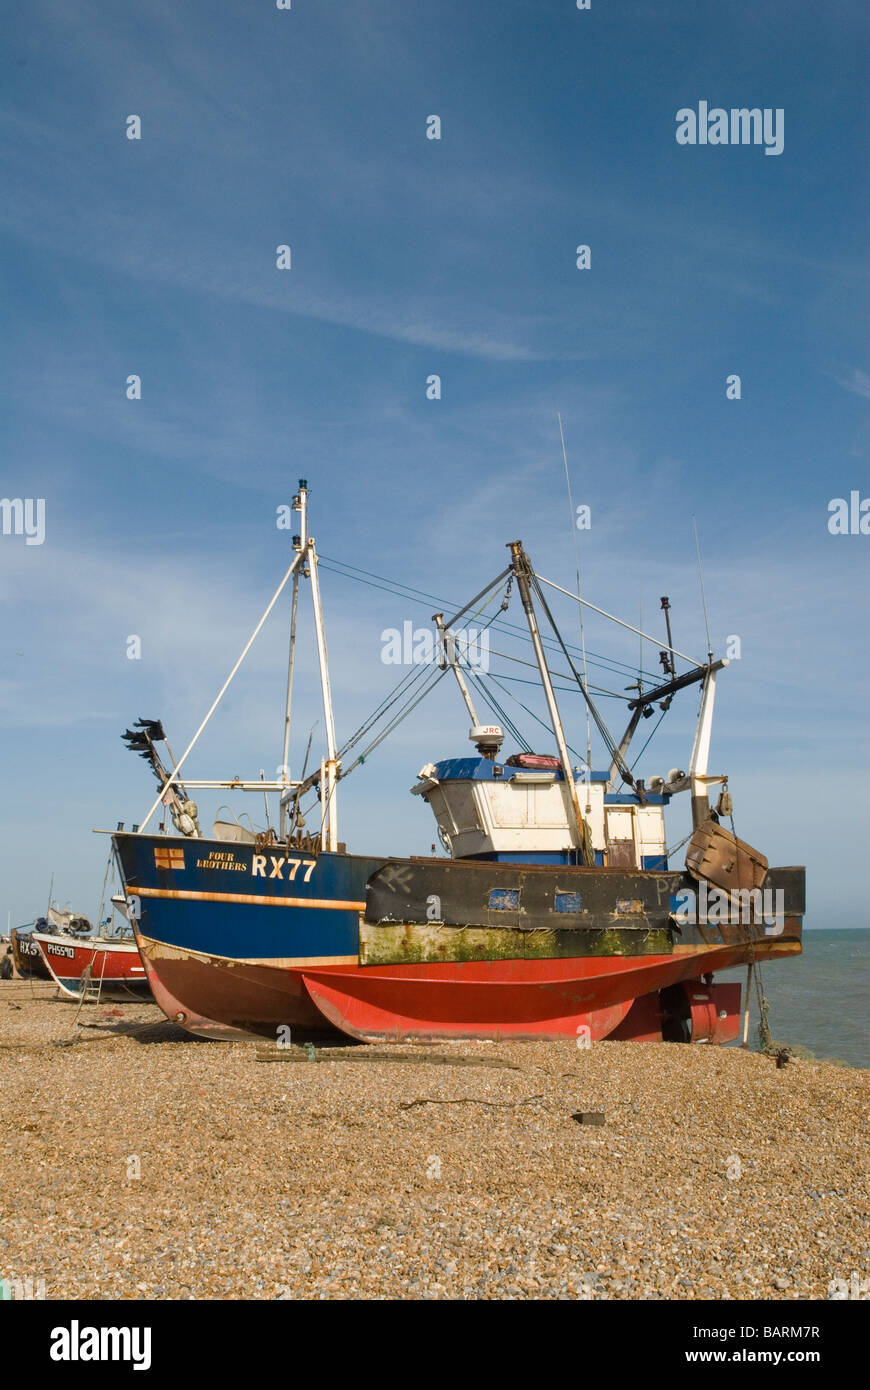 Fishing boats Hastings East Sussex 1990s UK. Inshore fishing fleet UK HOMER SYKES Stock Photo